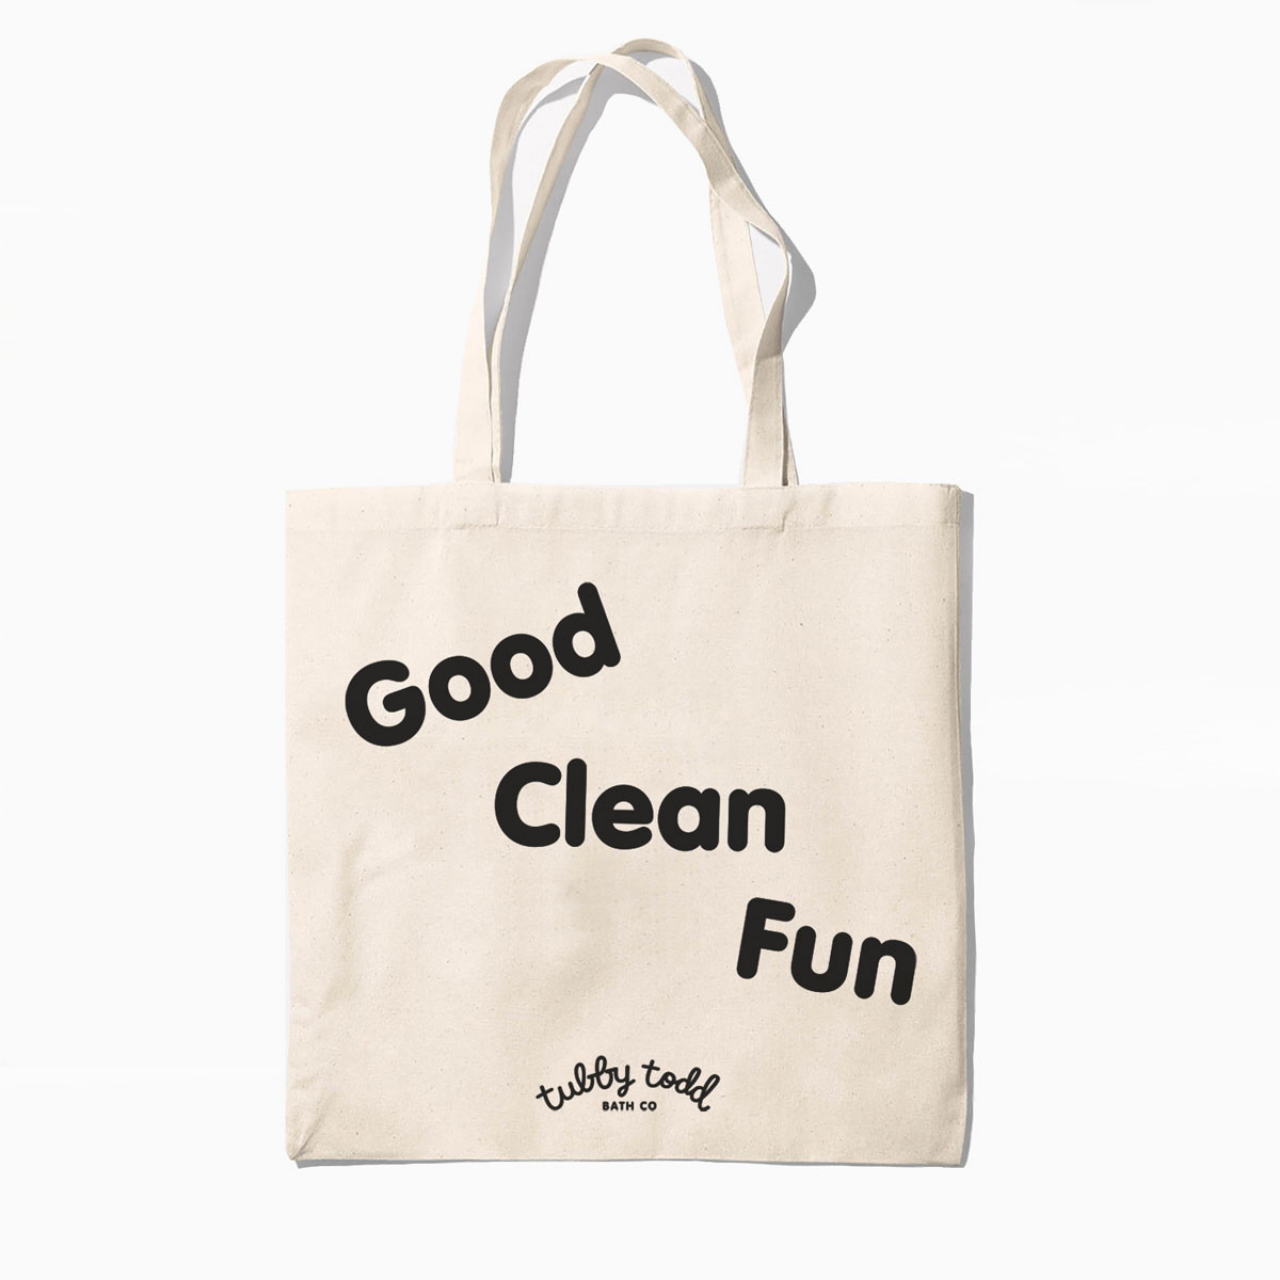 Good Clean Fun tote